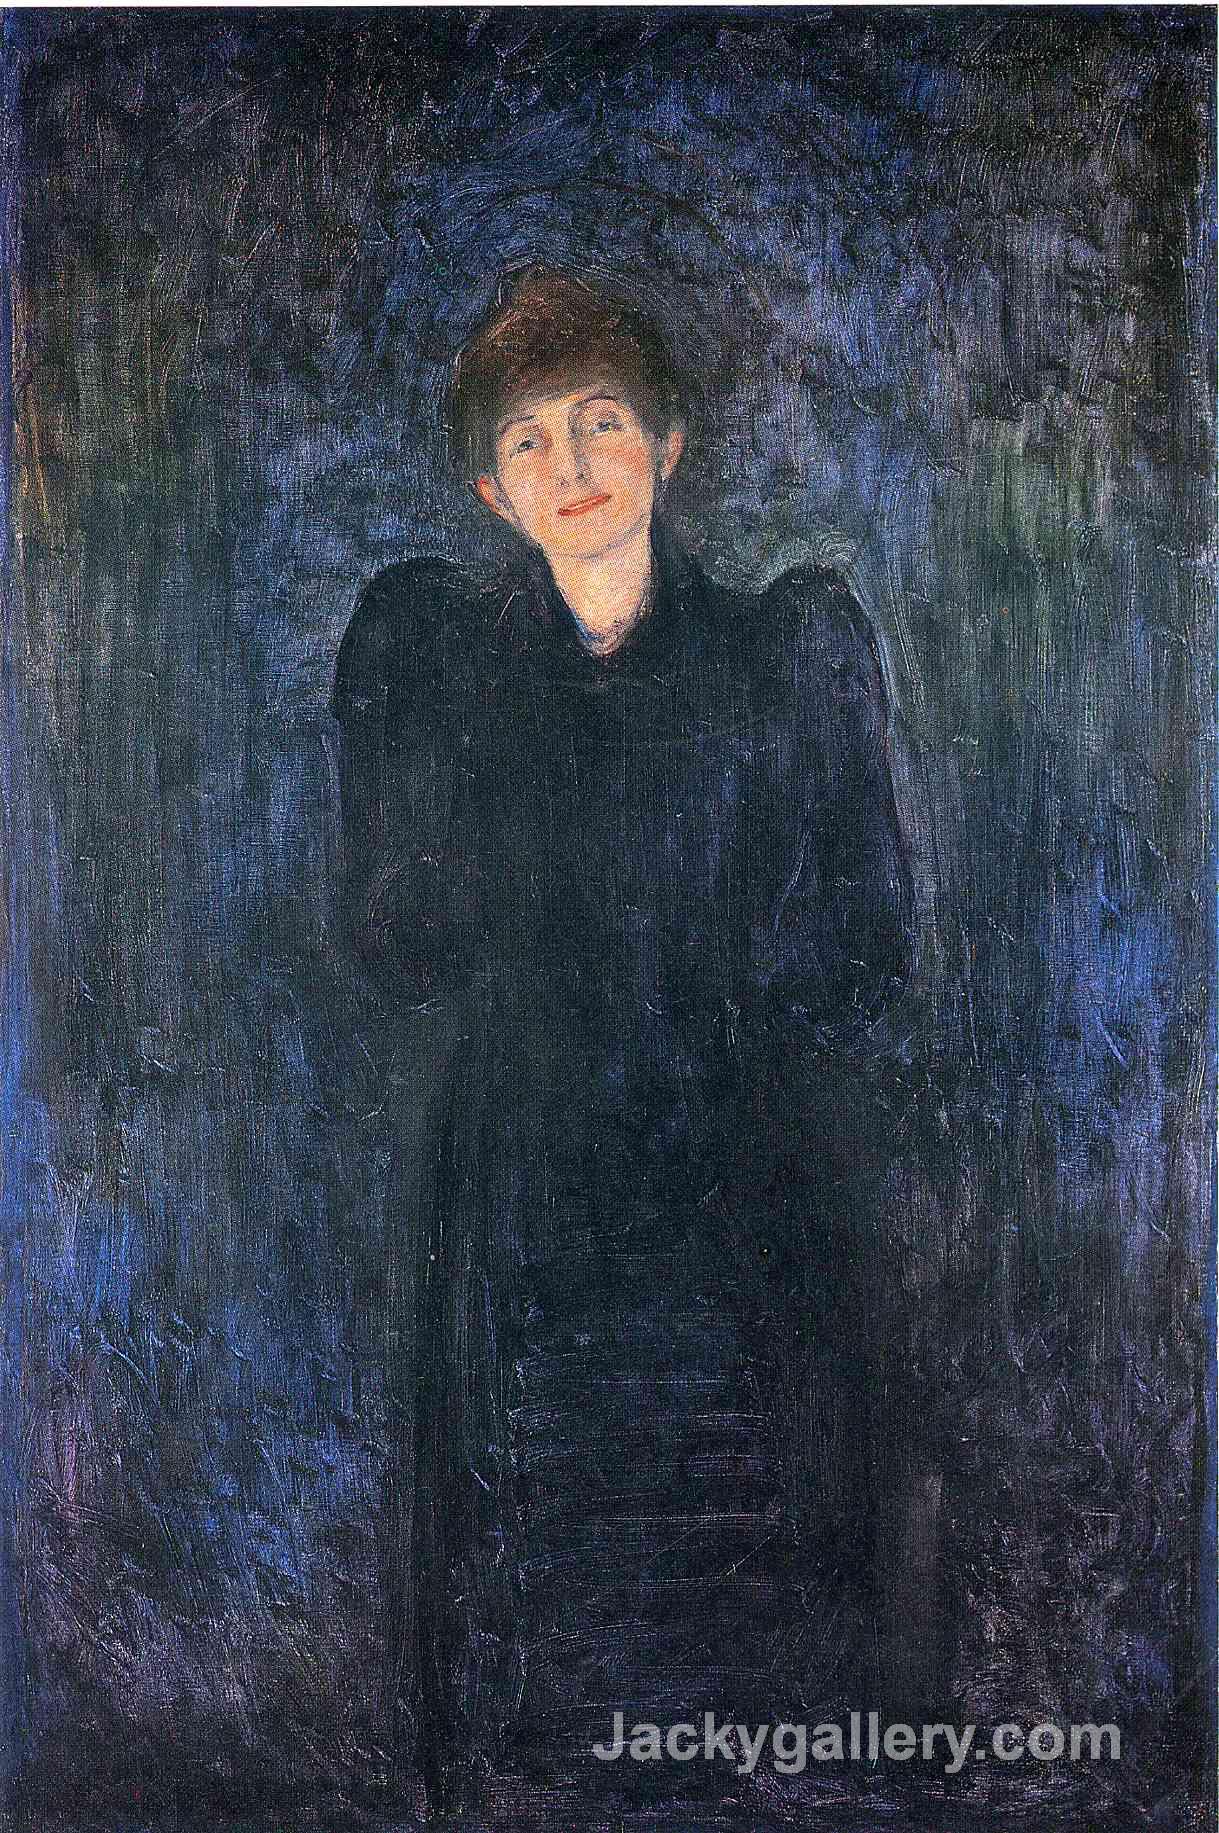 Dagny Juel Przybyszewska by Edvard Munch paintings reproduction